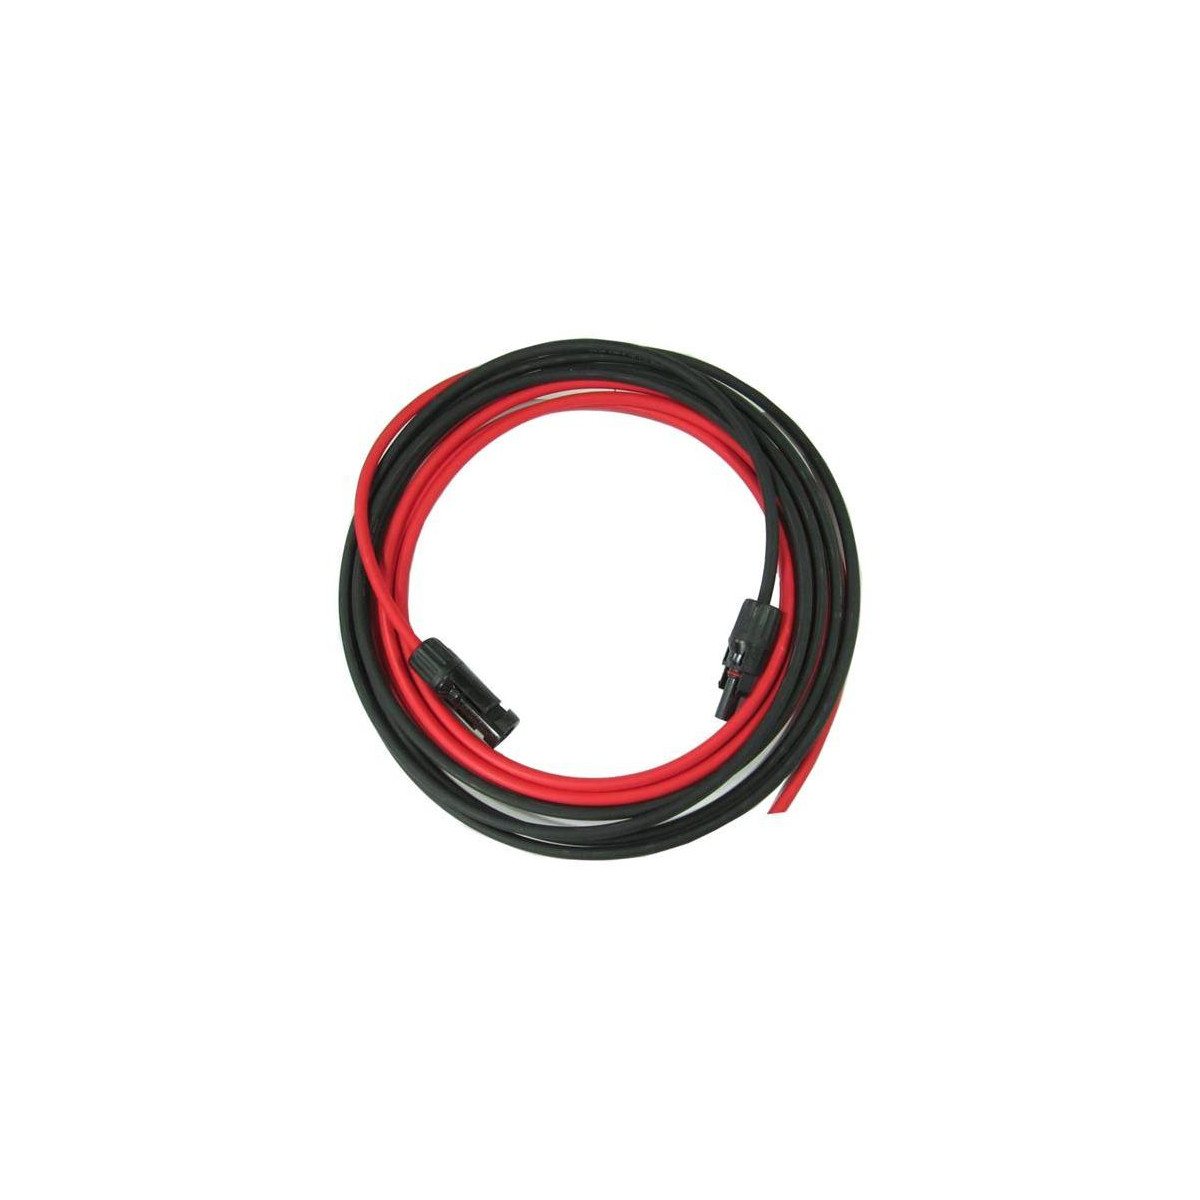 Viac oSolární kabel 6mm2, červený+černý s konektory MC4, 10m